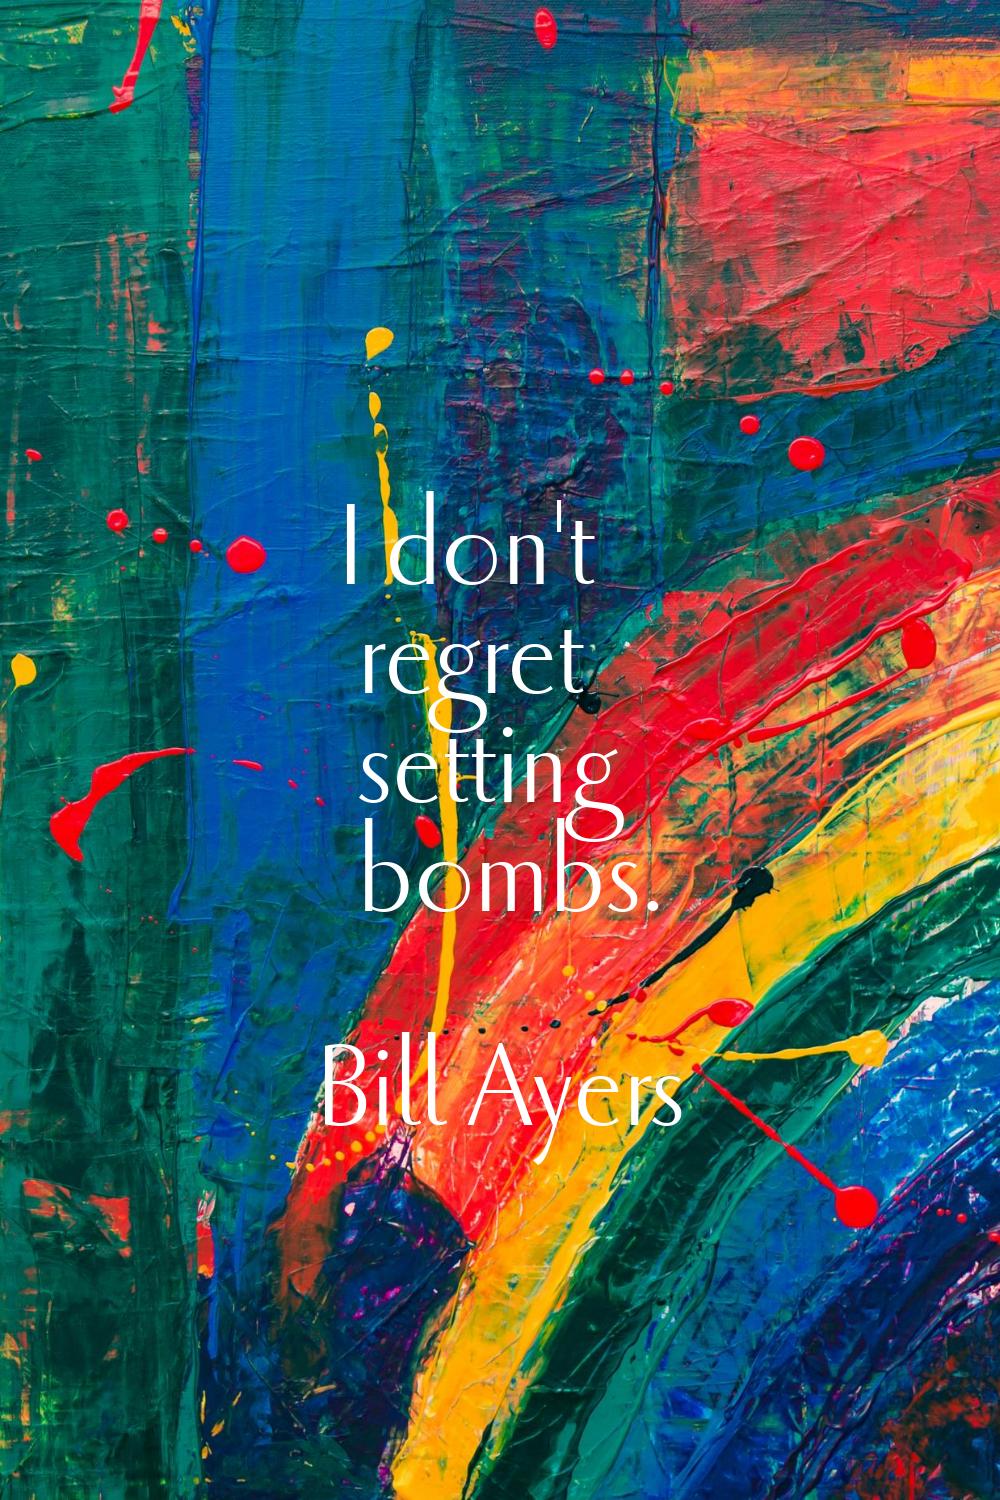 I don't regret setting bombs.